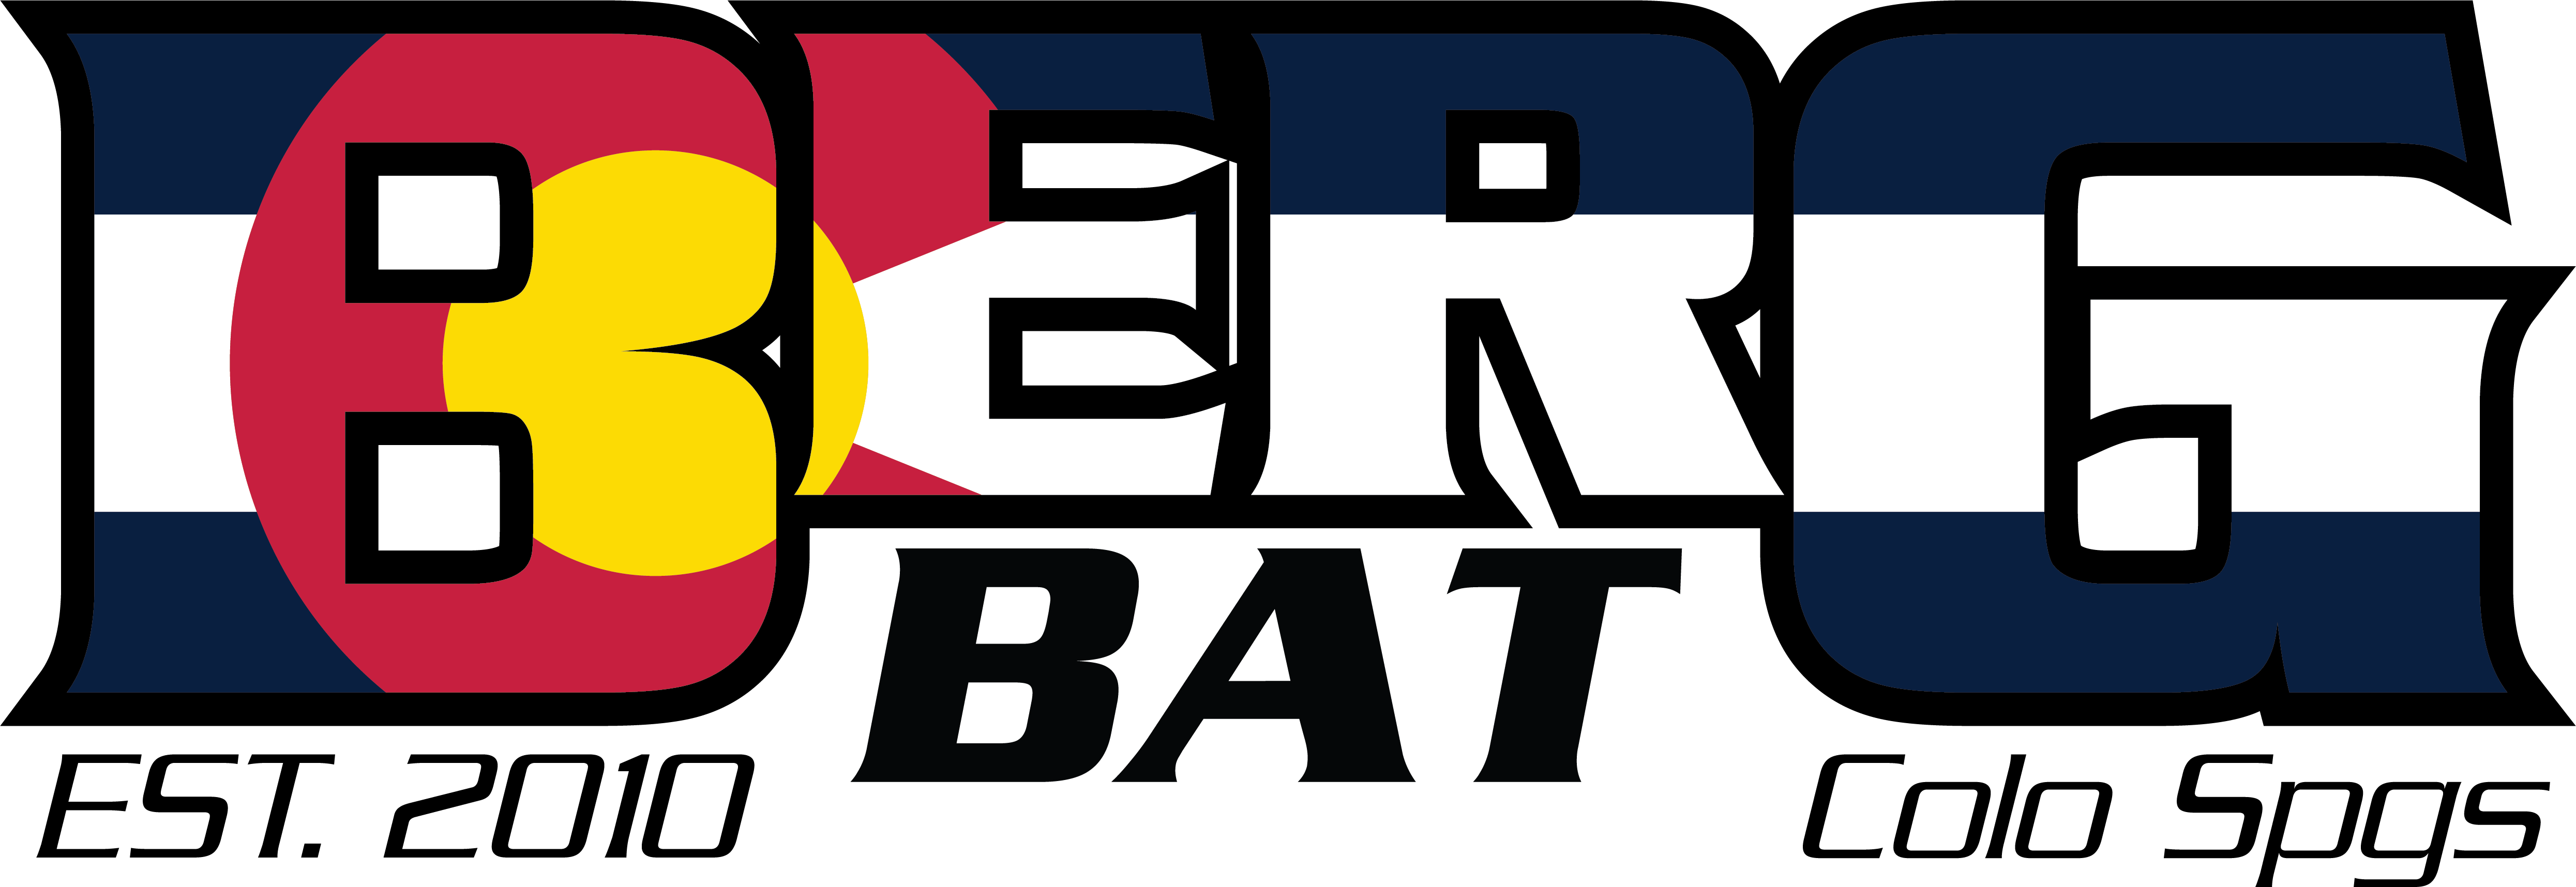 Berg Bat Logo